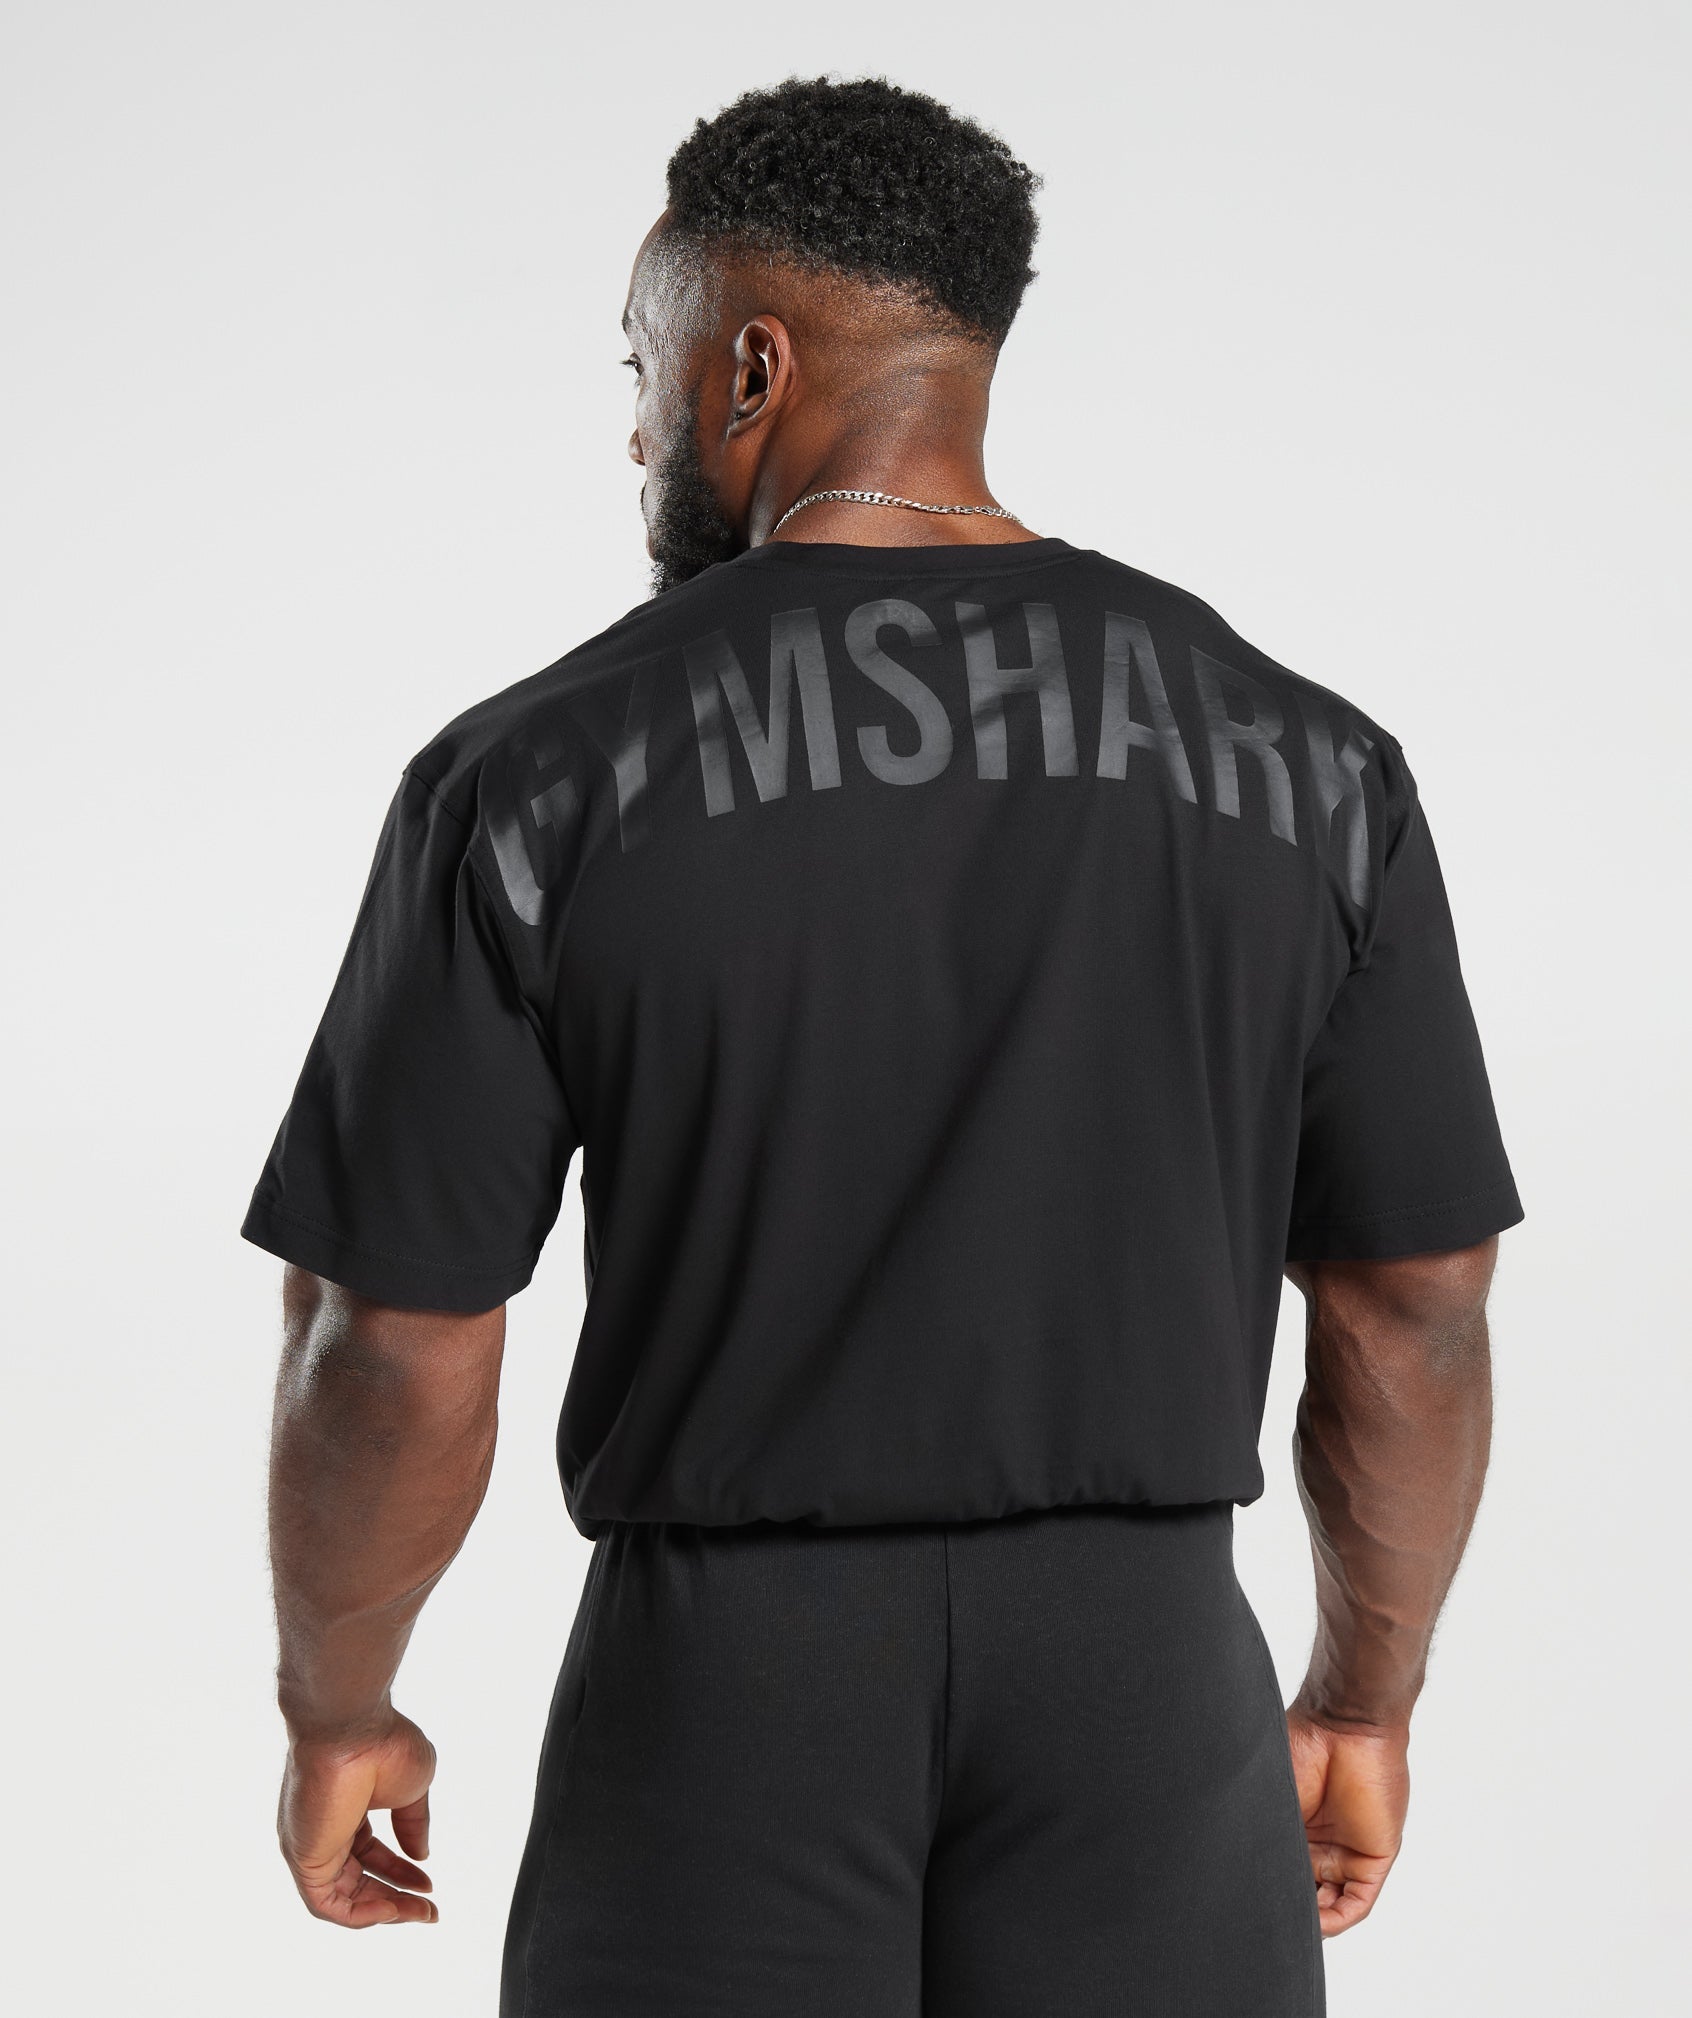 BNIP Gymshark Element Baselayer Longsleeve T-Shirt, Men's Fashion